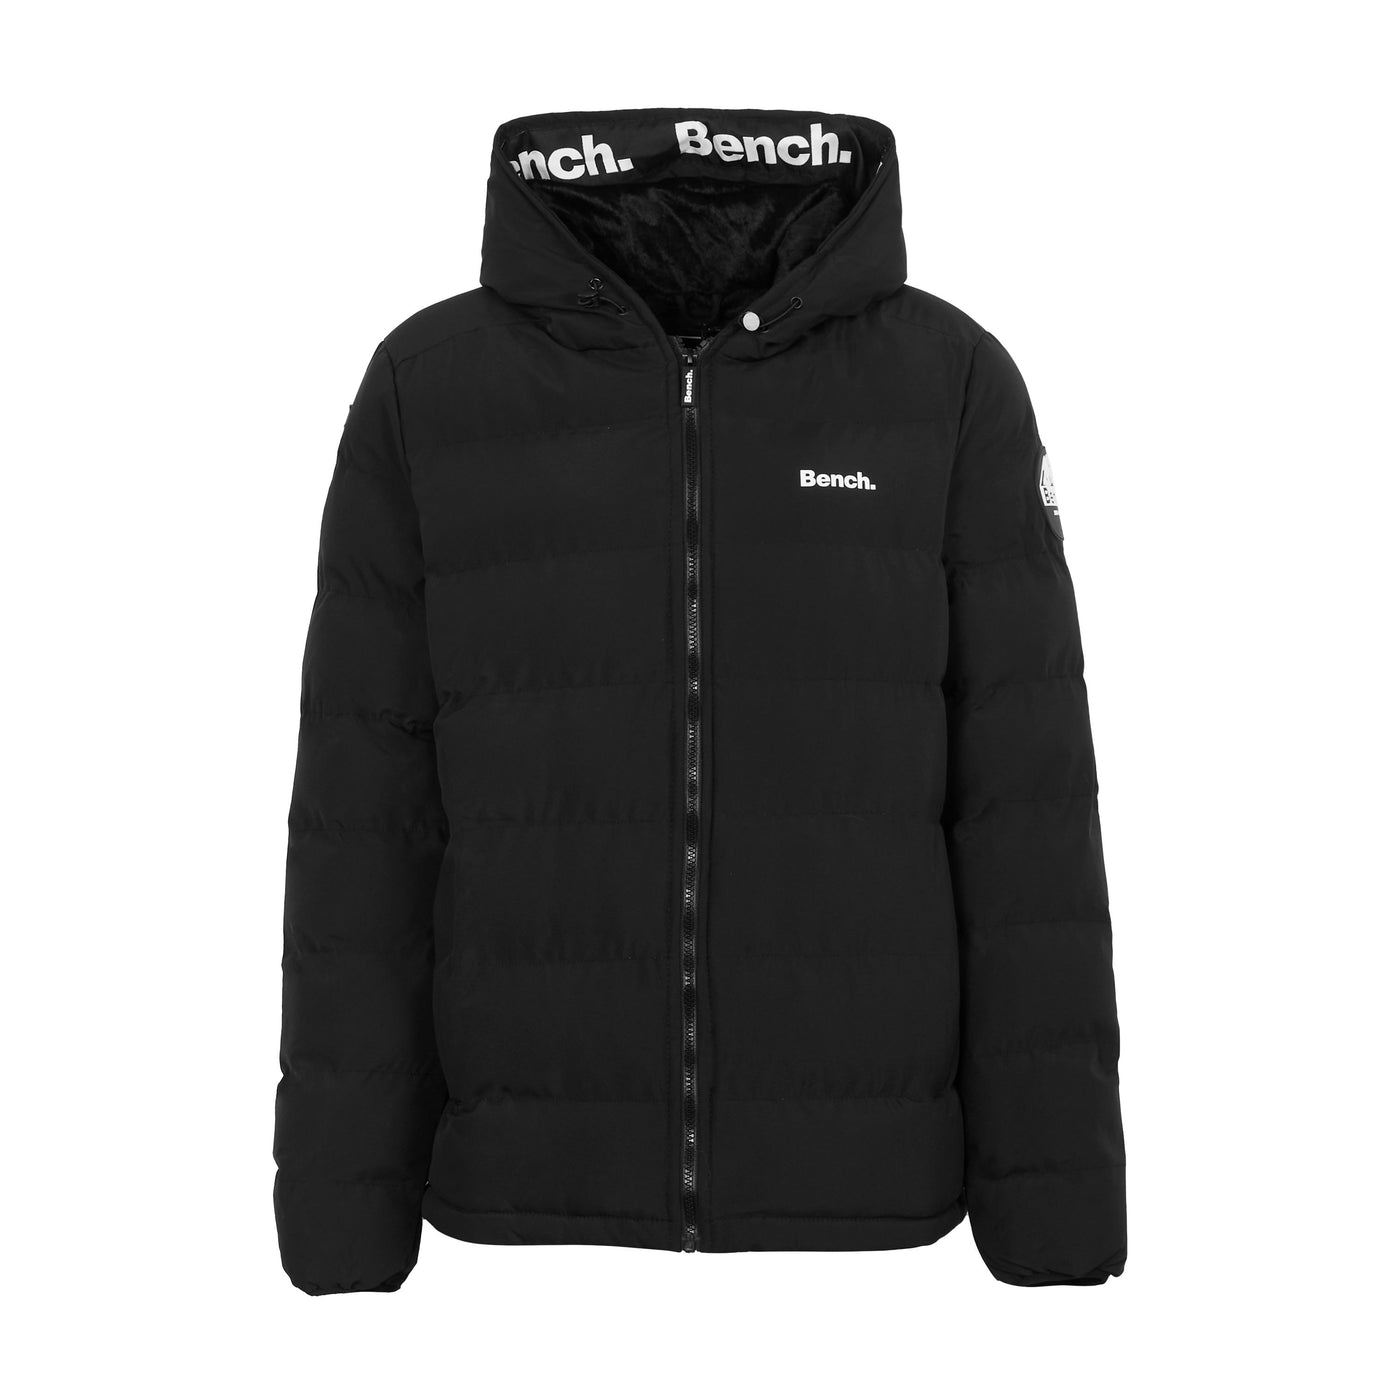 Bench Original Mens Heavy Weight Fleece Lined Padded Ultra Warm Winter Black Hooded Coat Jacket Zip Pockets Inside Zip Pocket